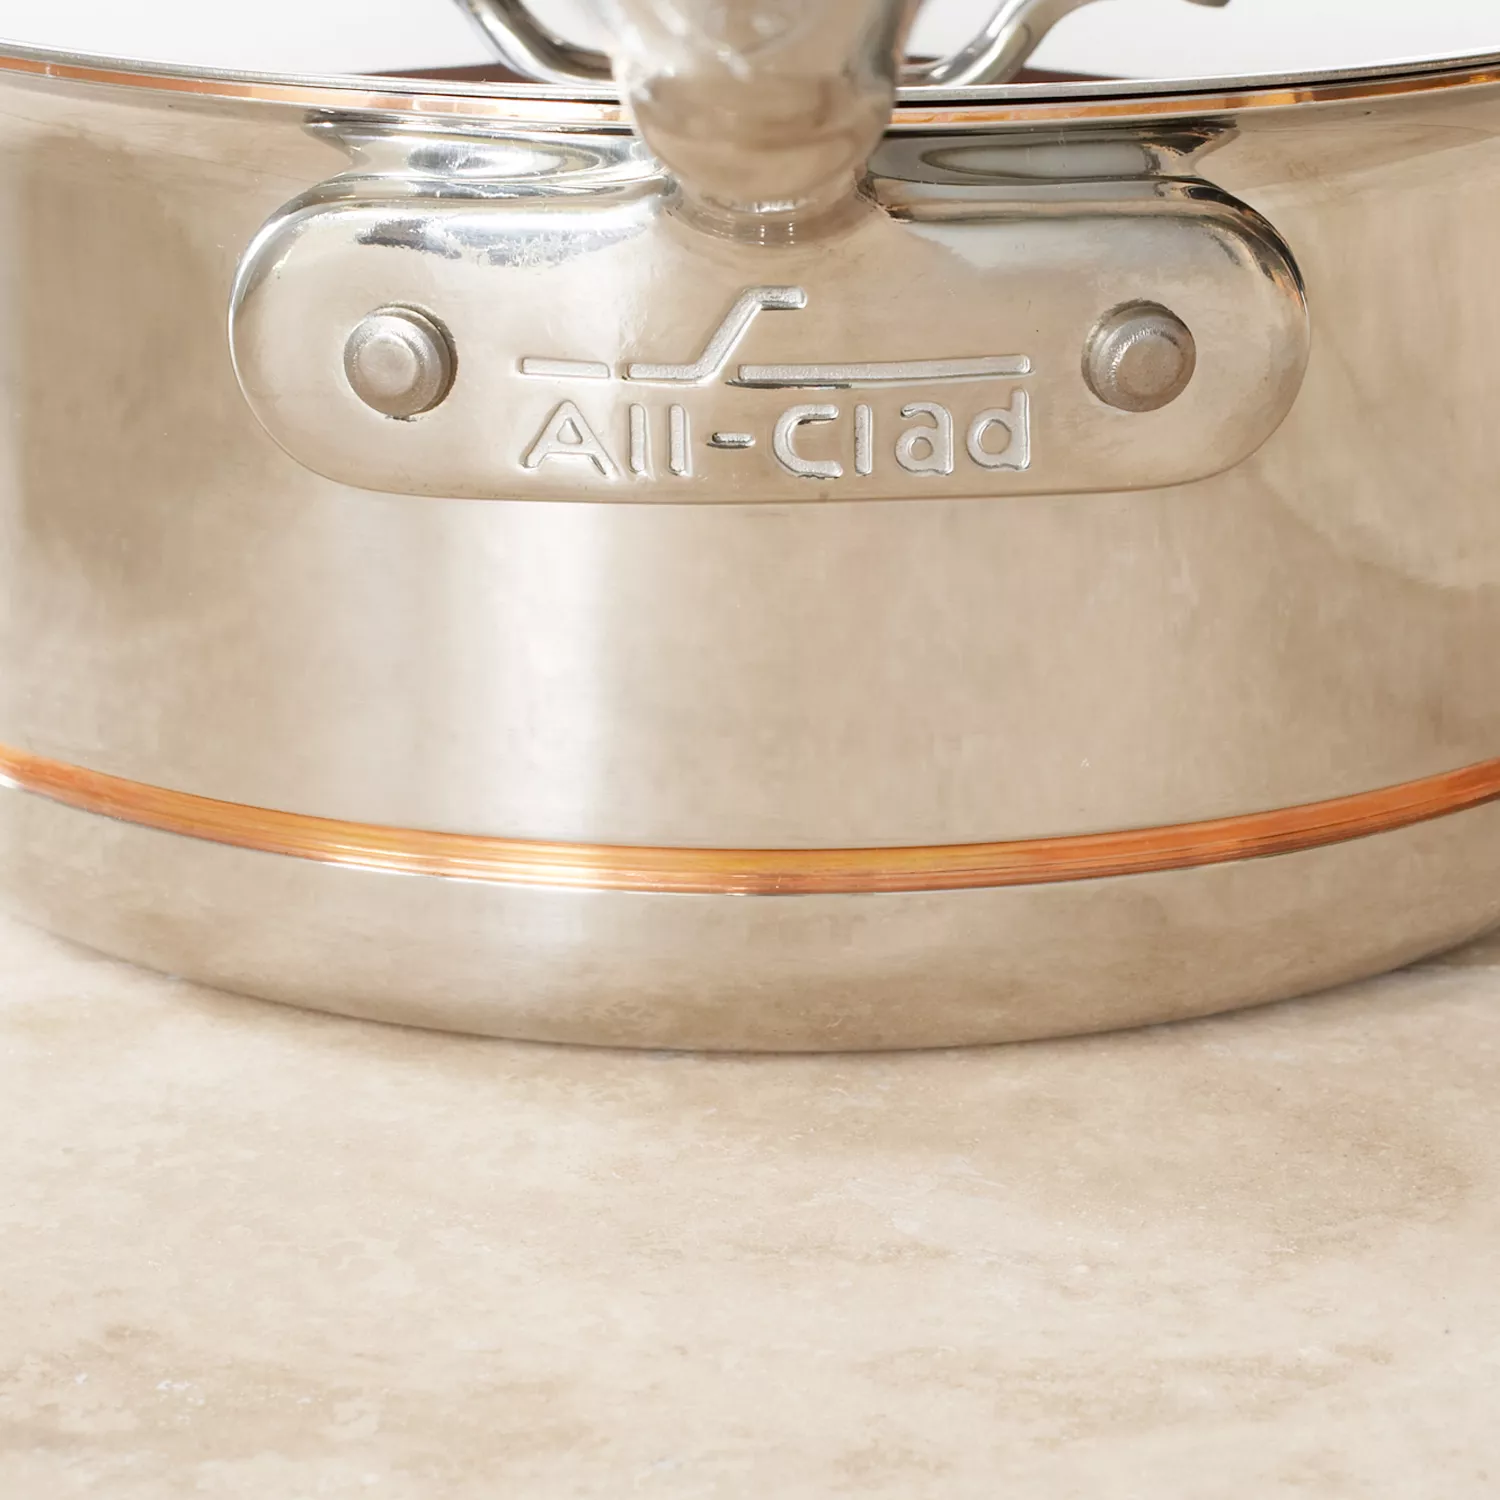 All-Clad Copper Core Sauce Pan Set of 2